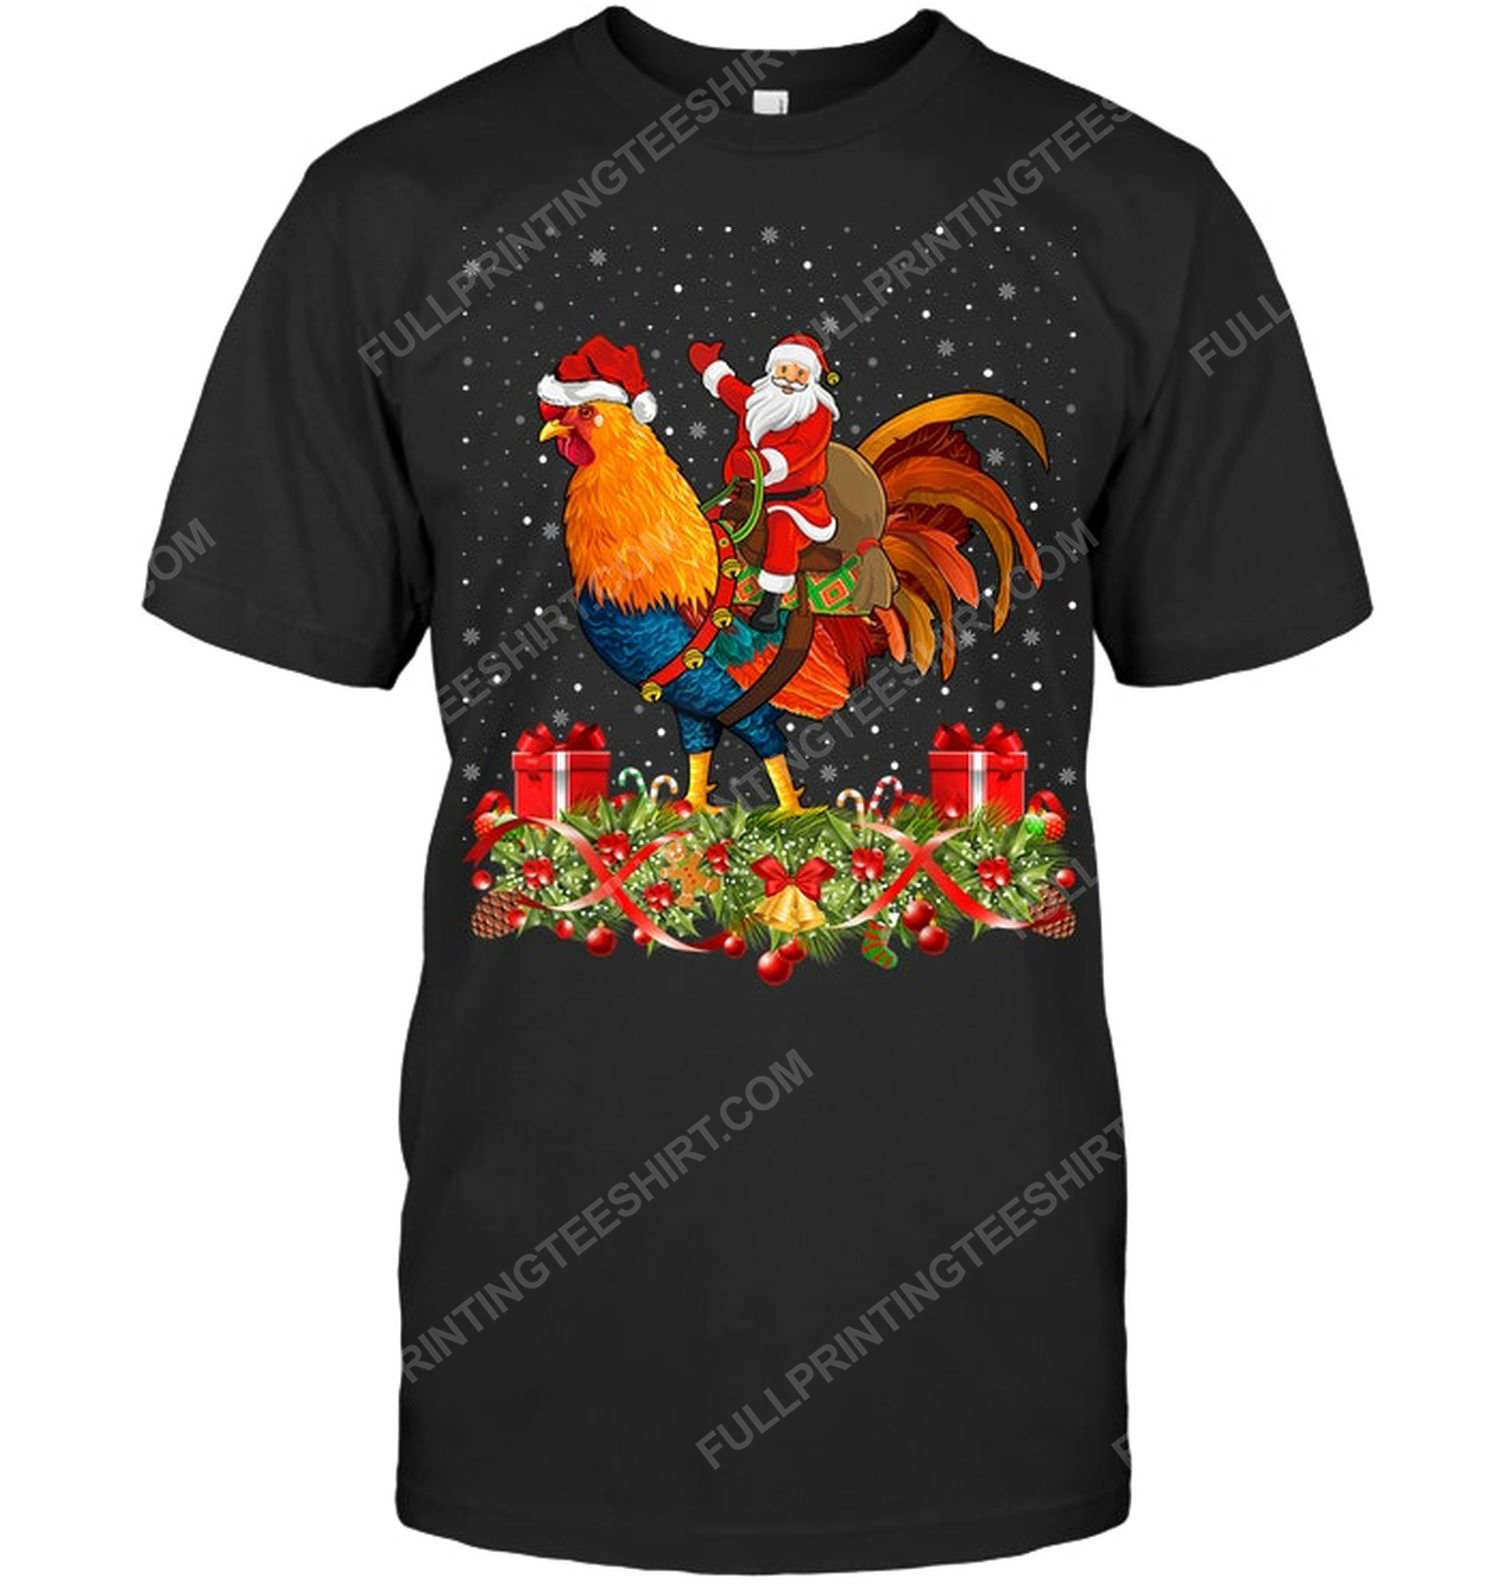 Christmas time santa riding rooster tshirt